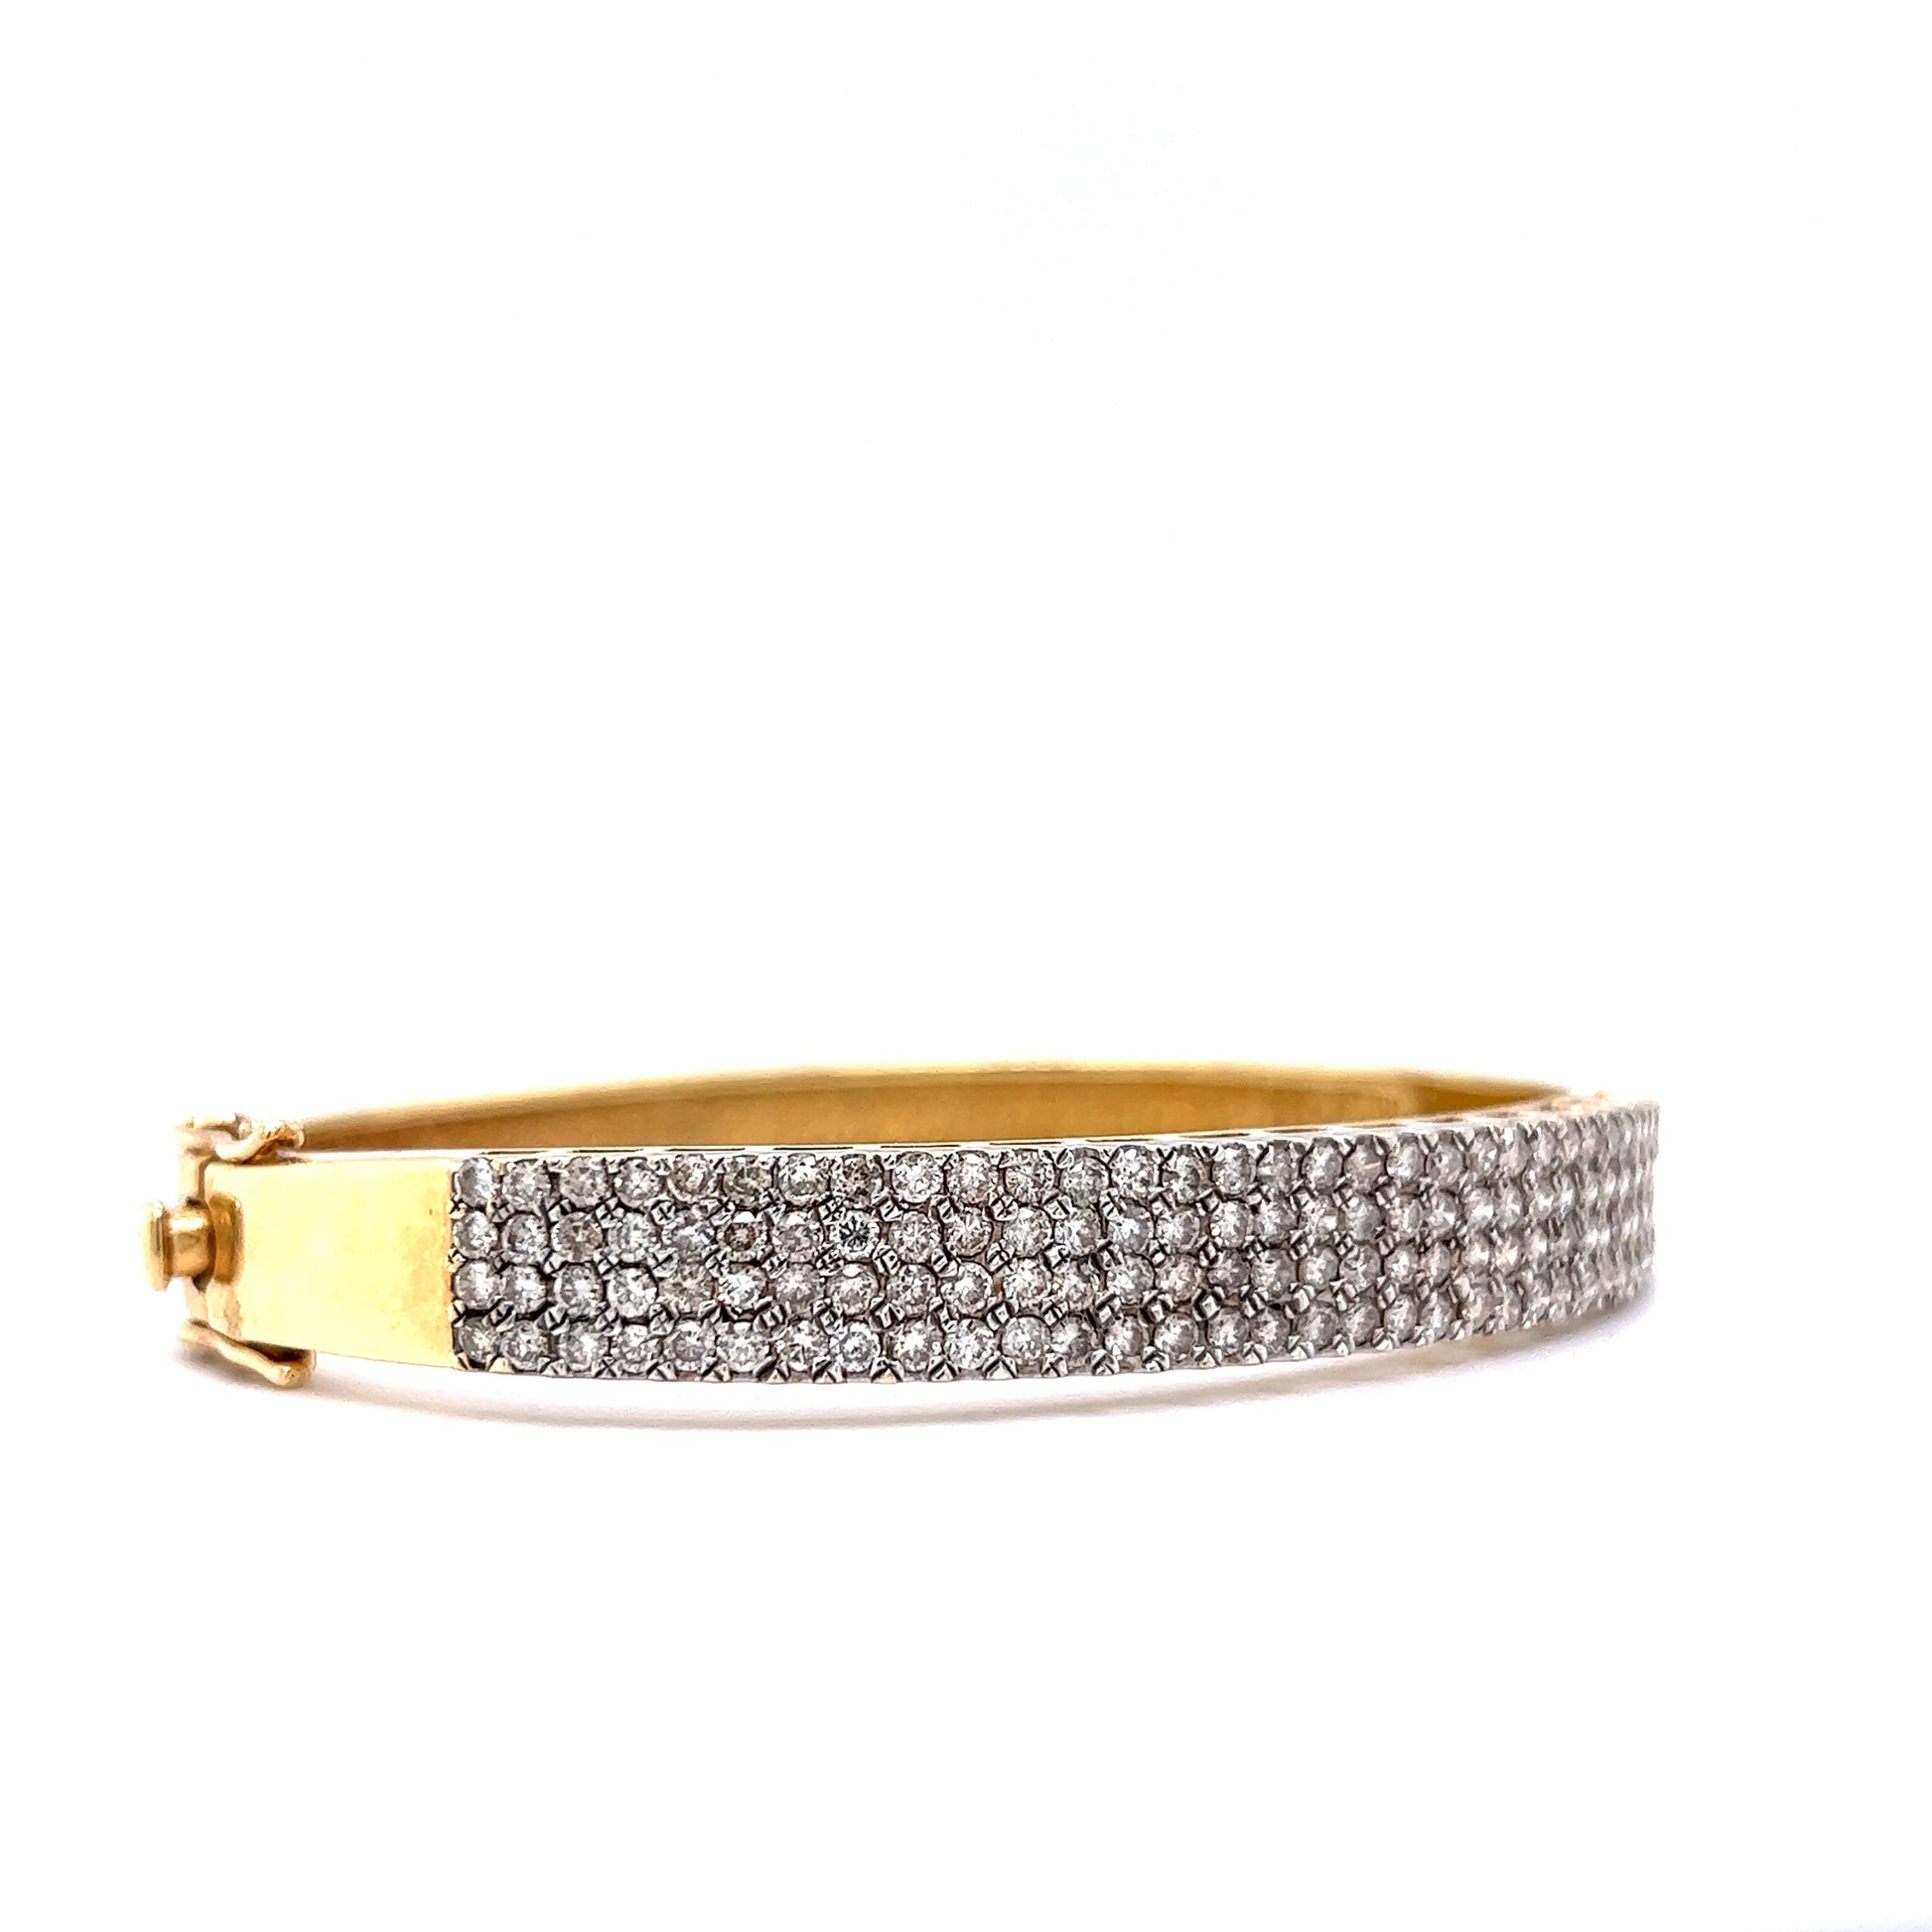 3.84 Carat Pave Diamond Bracelet in 14K Yellow Gold